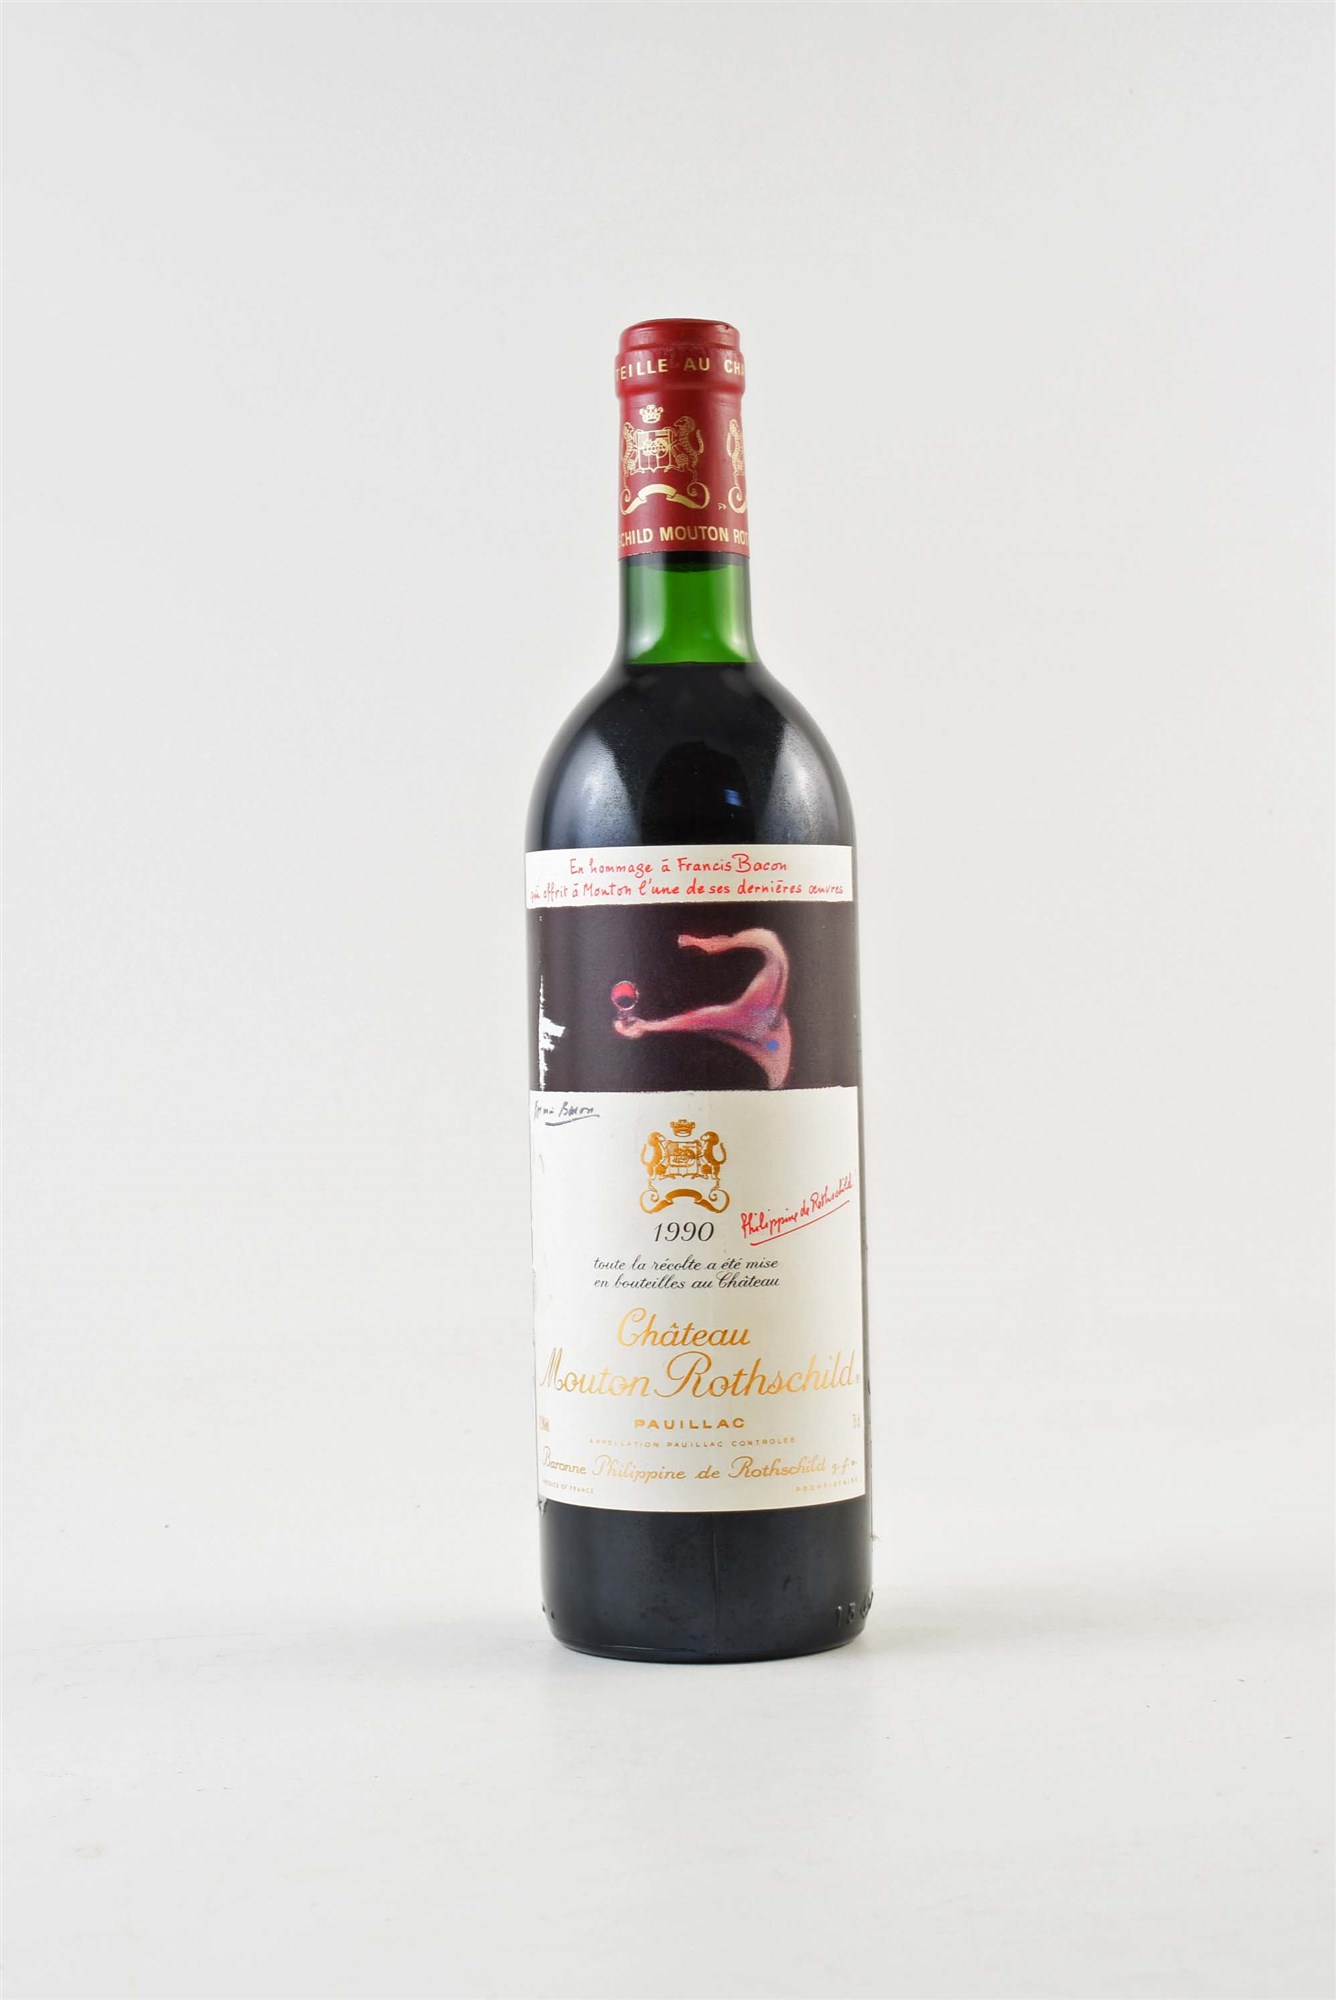 1x bottle of Chateau Mouton Rothschild 1990, Top shoulder. 75cl.